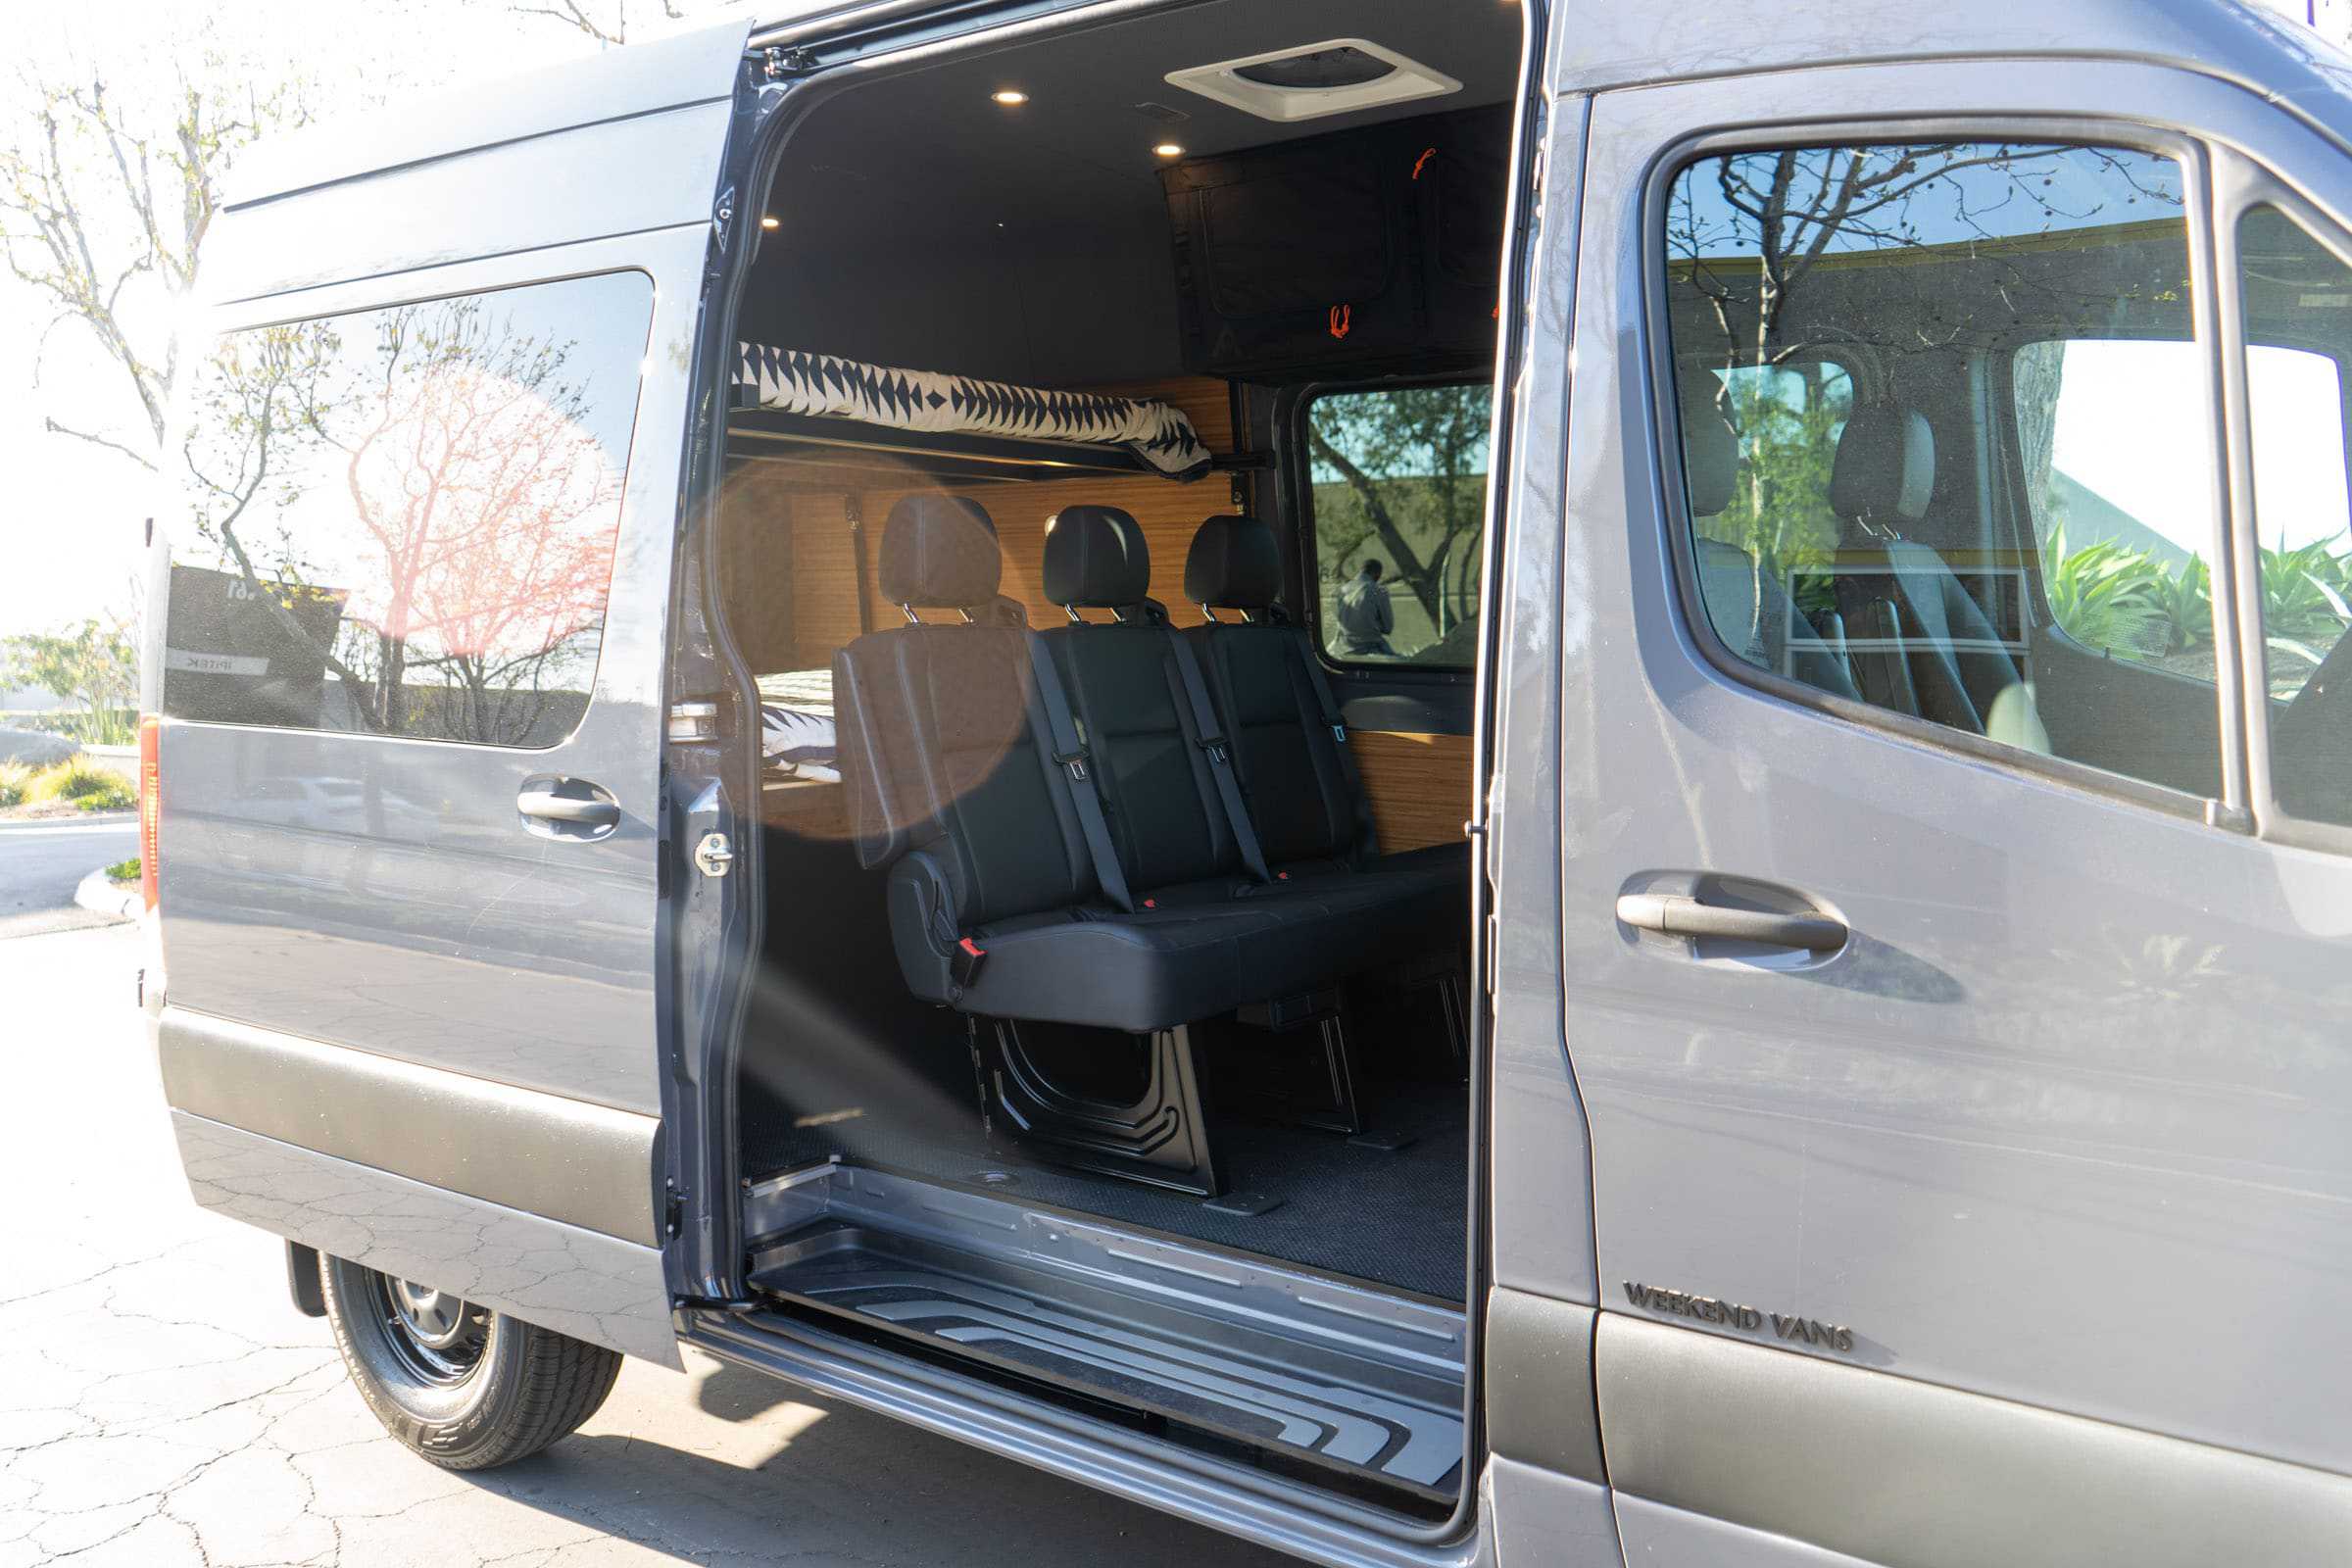 Sold] New 2021 Weekend Vans Sprinter | Seats and Sleeps 5 - Vanlife Trader